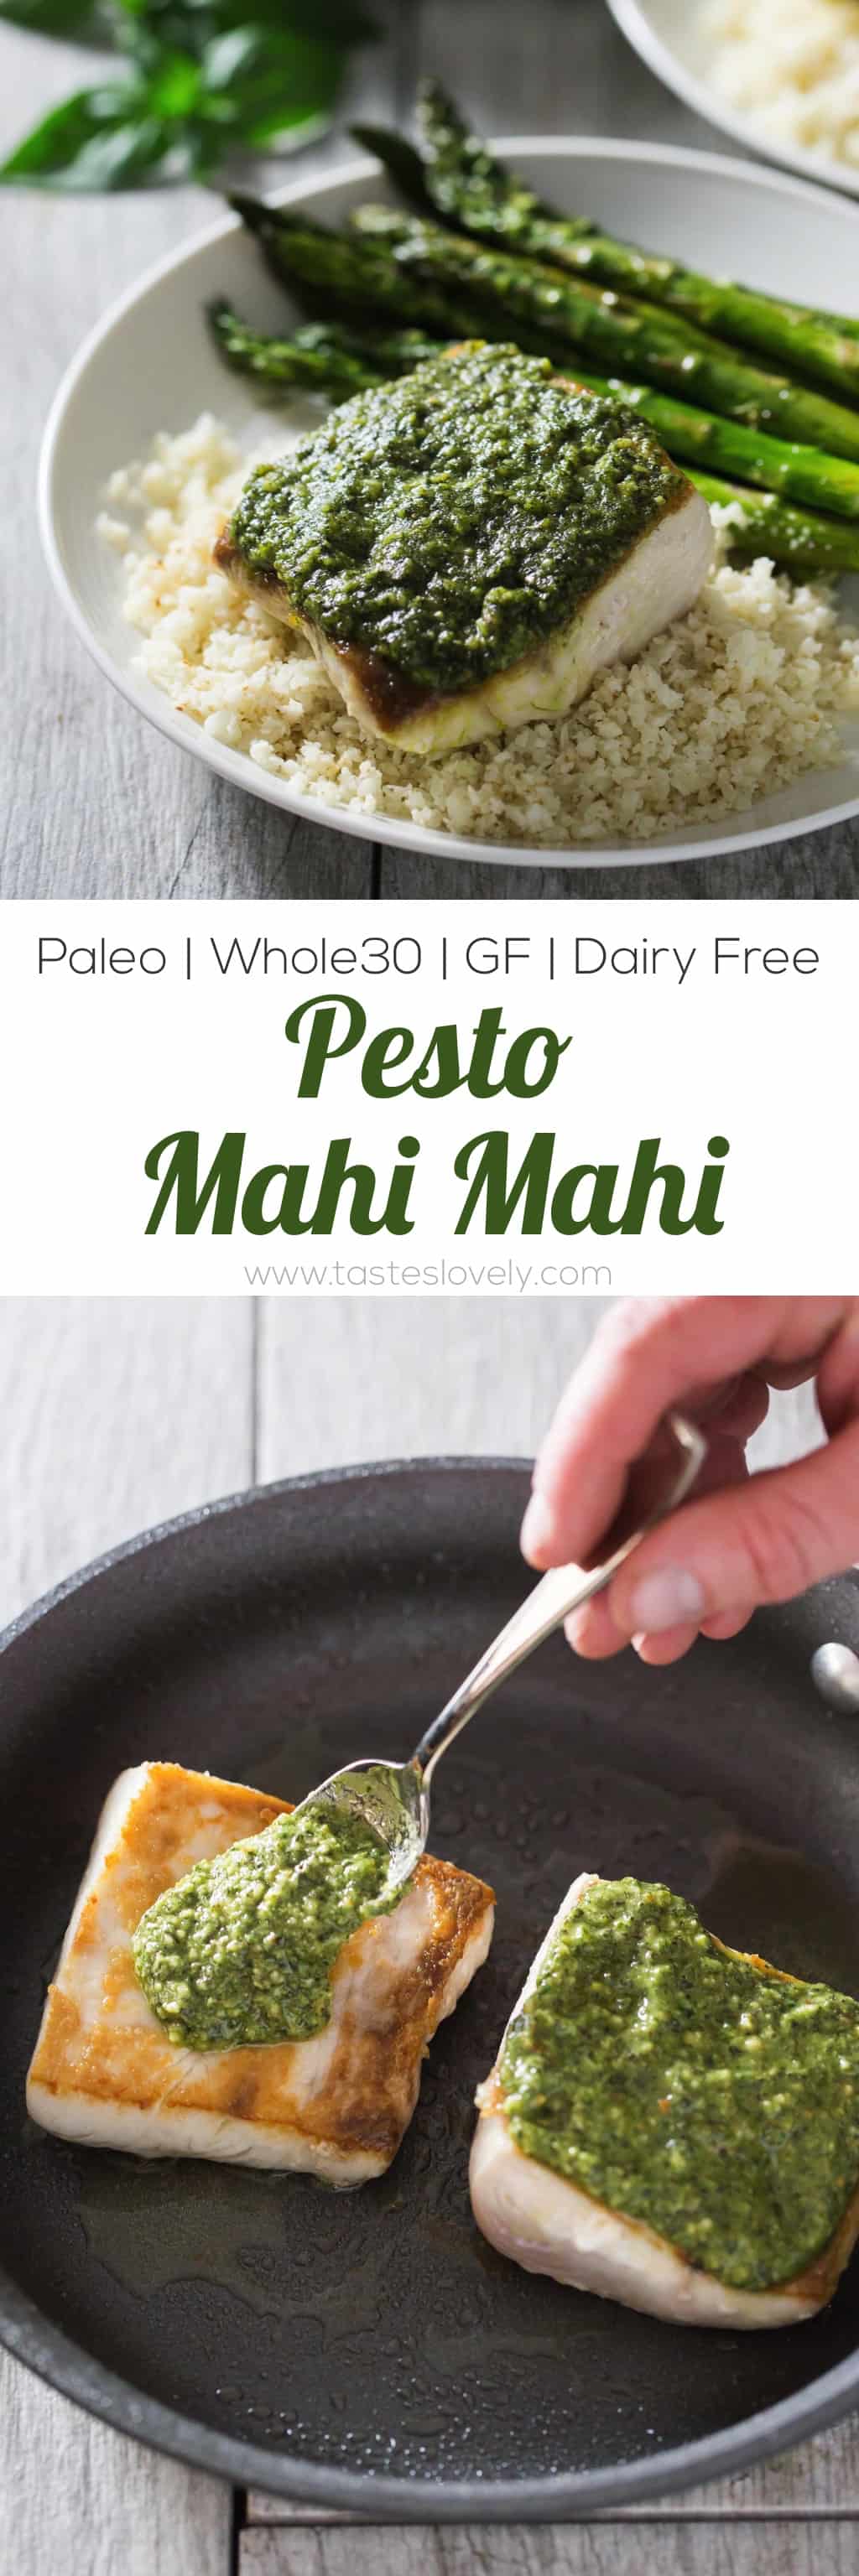 Pesto Mahi Mahi - a simple and fresh fish dinner recipe that is paleo, gluten free, Whole30 and dairy free!